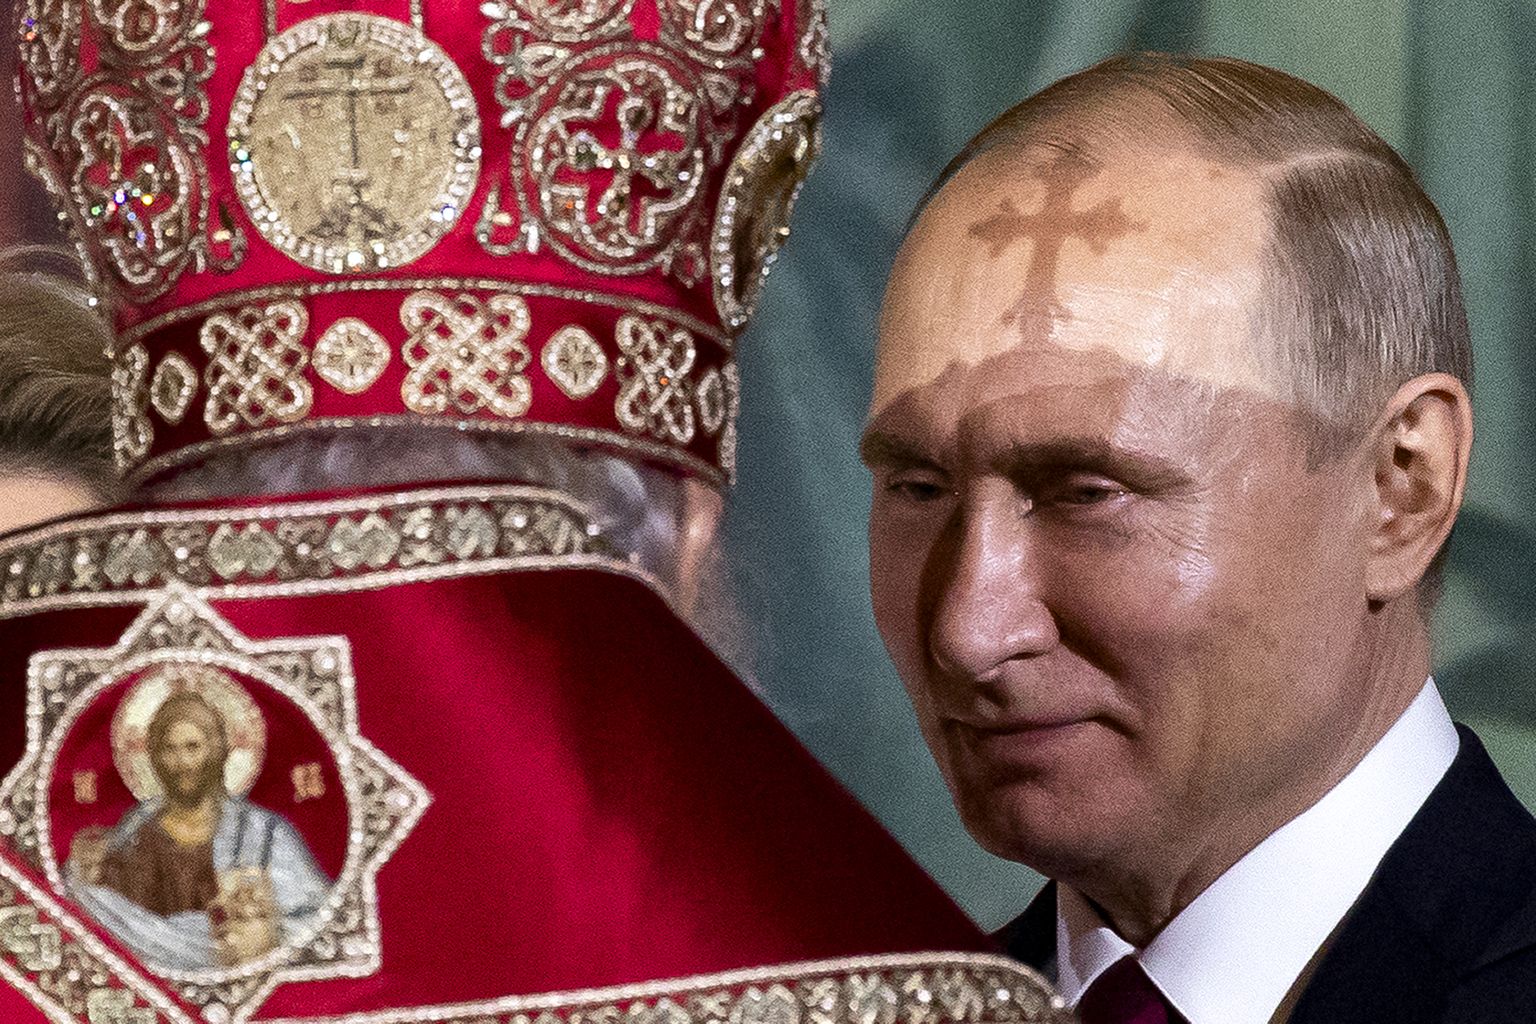 Moskva patriarh Kirill (vasakul) ja Vene president Vladimir Putin (paremal). Foto on illustratiivne.